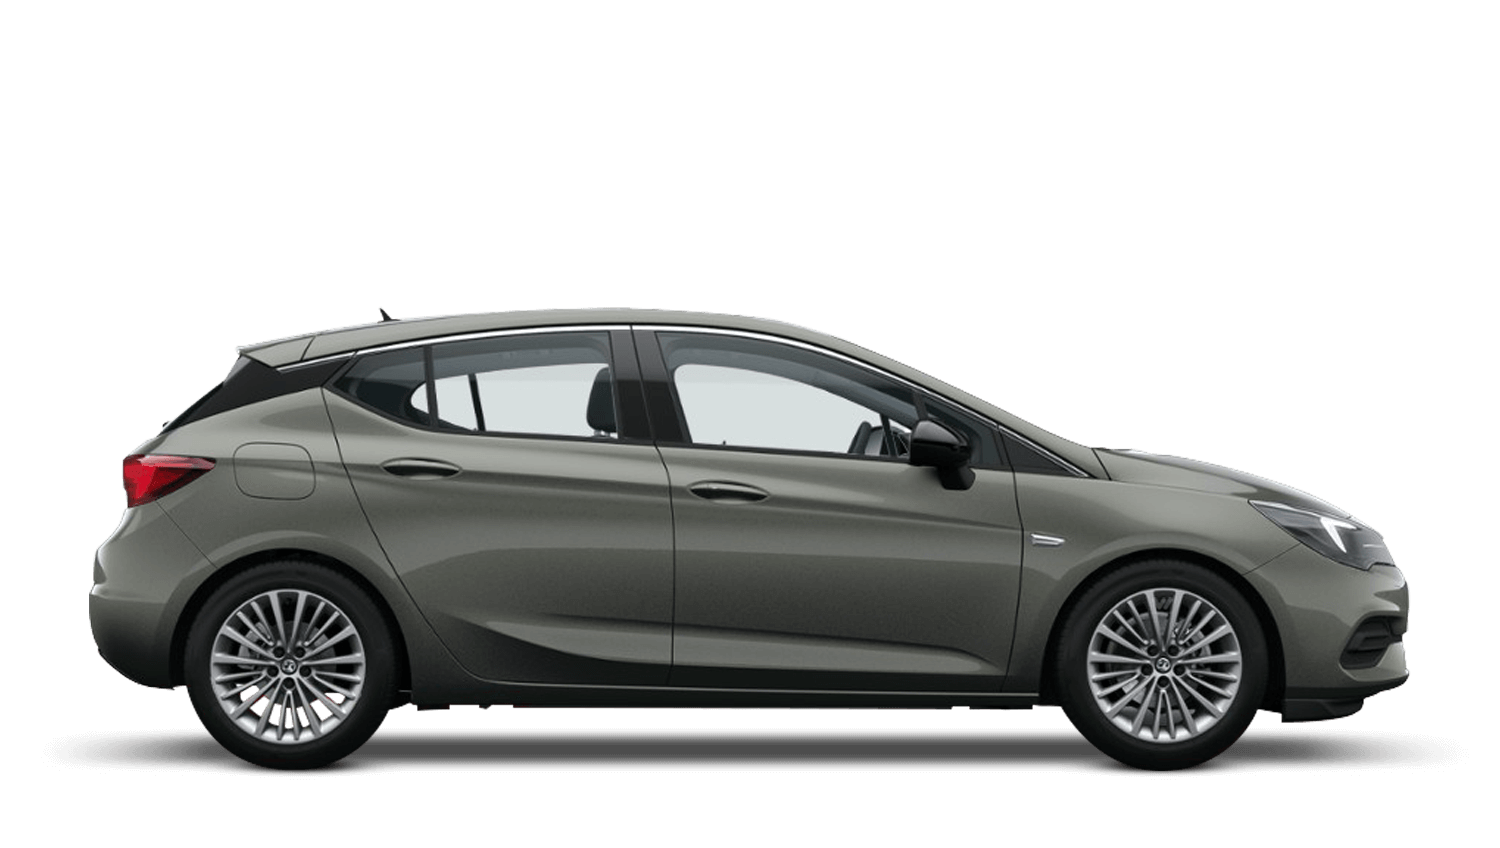 Cosmic Grey (Metallic) Vauxhall Astra